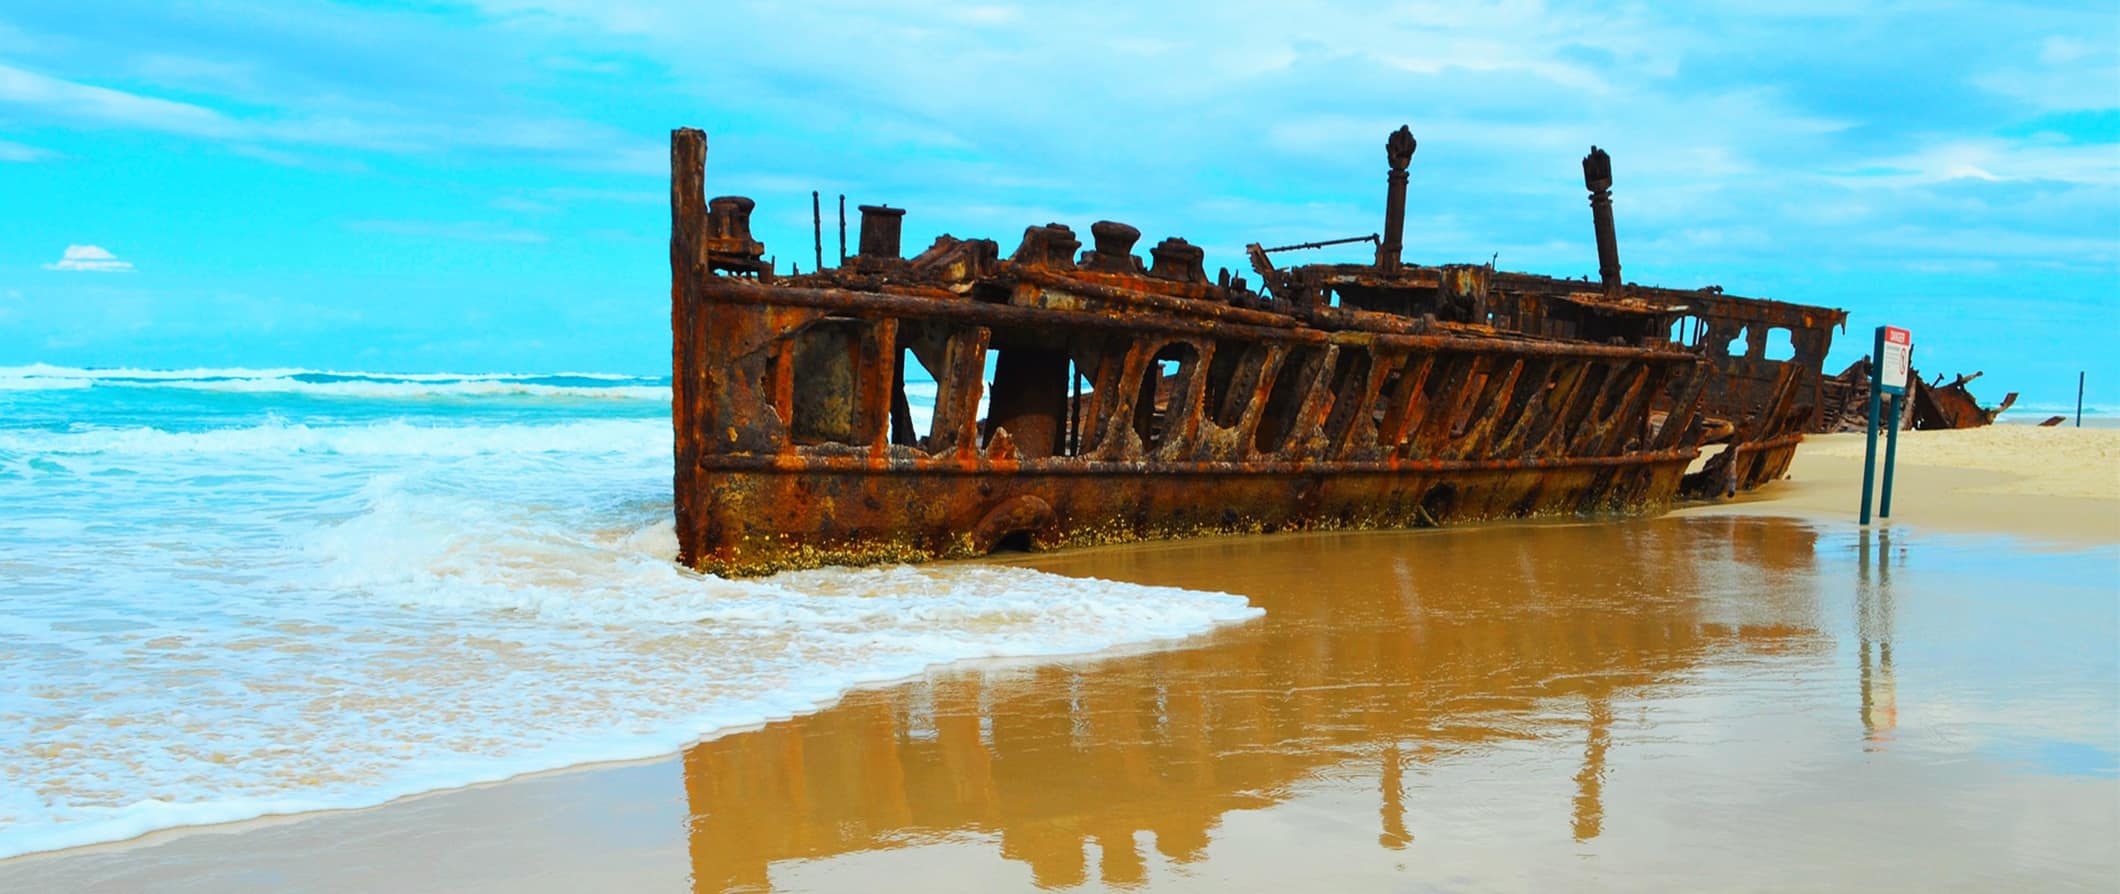 O famoso naufrágio enferrujado do século 20 na praia de Fraser Island, na Austrália.